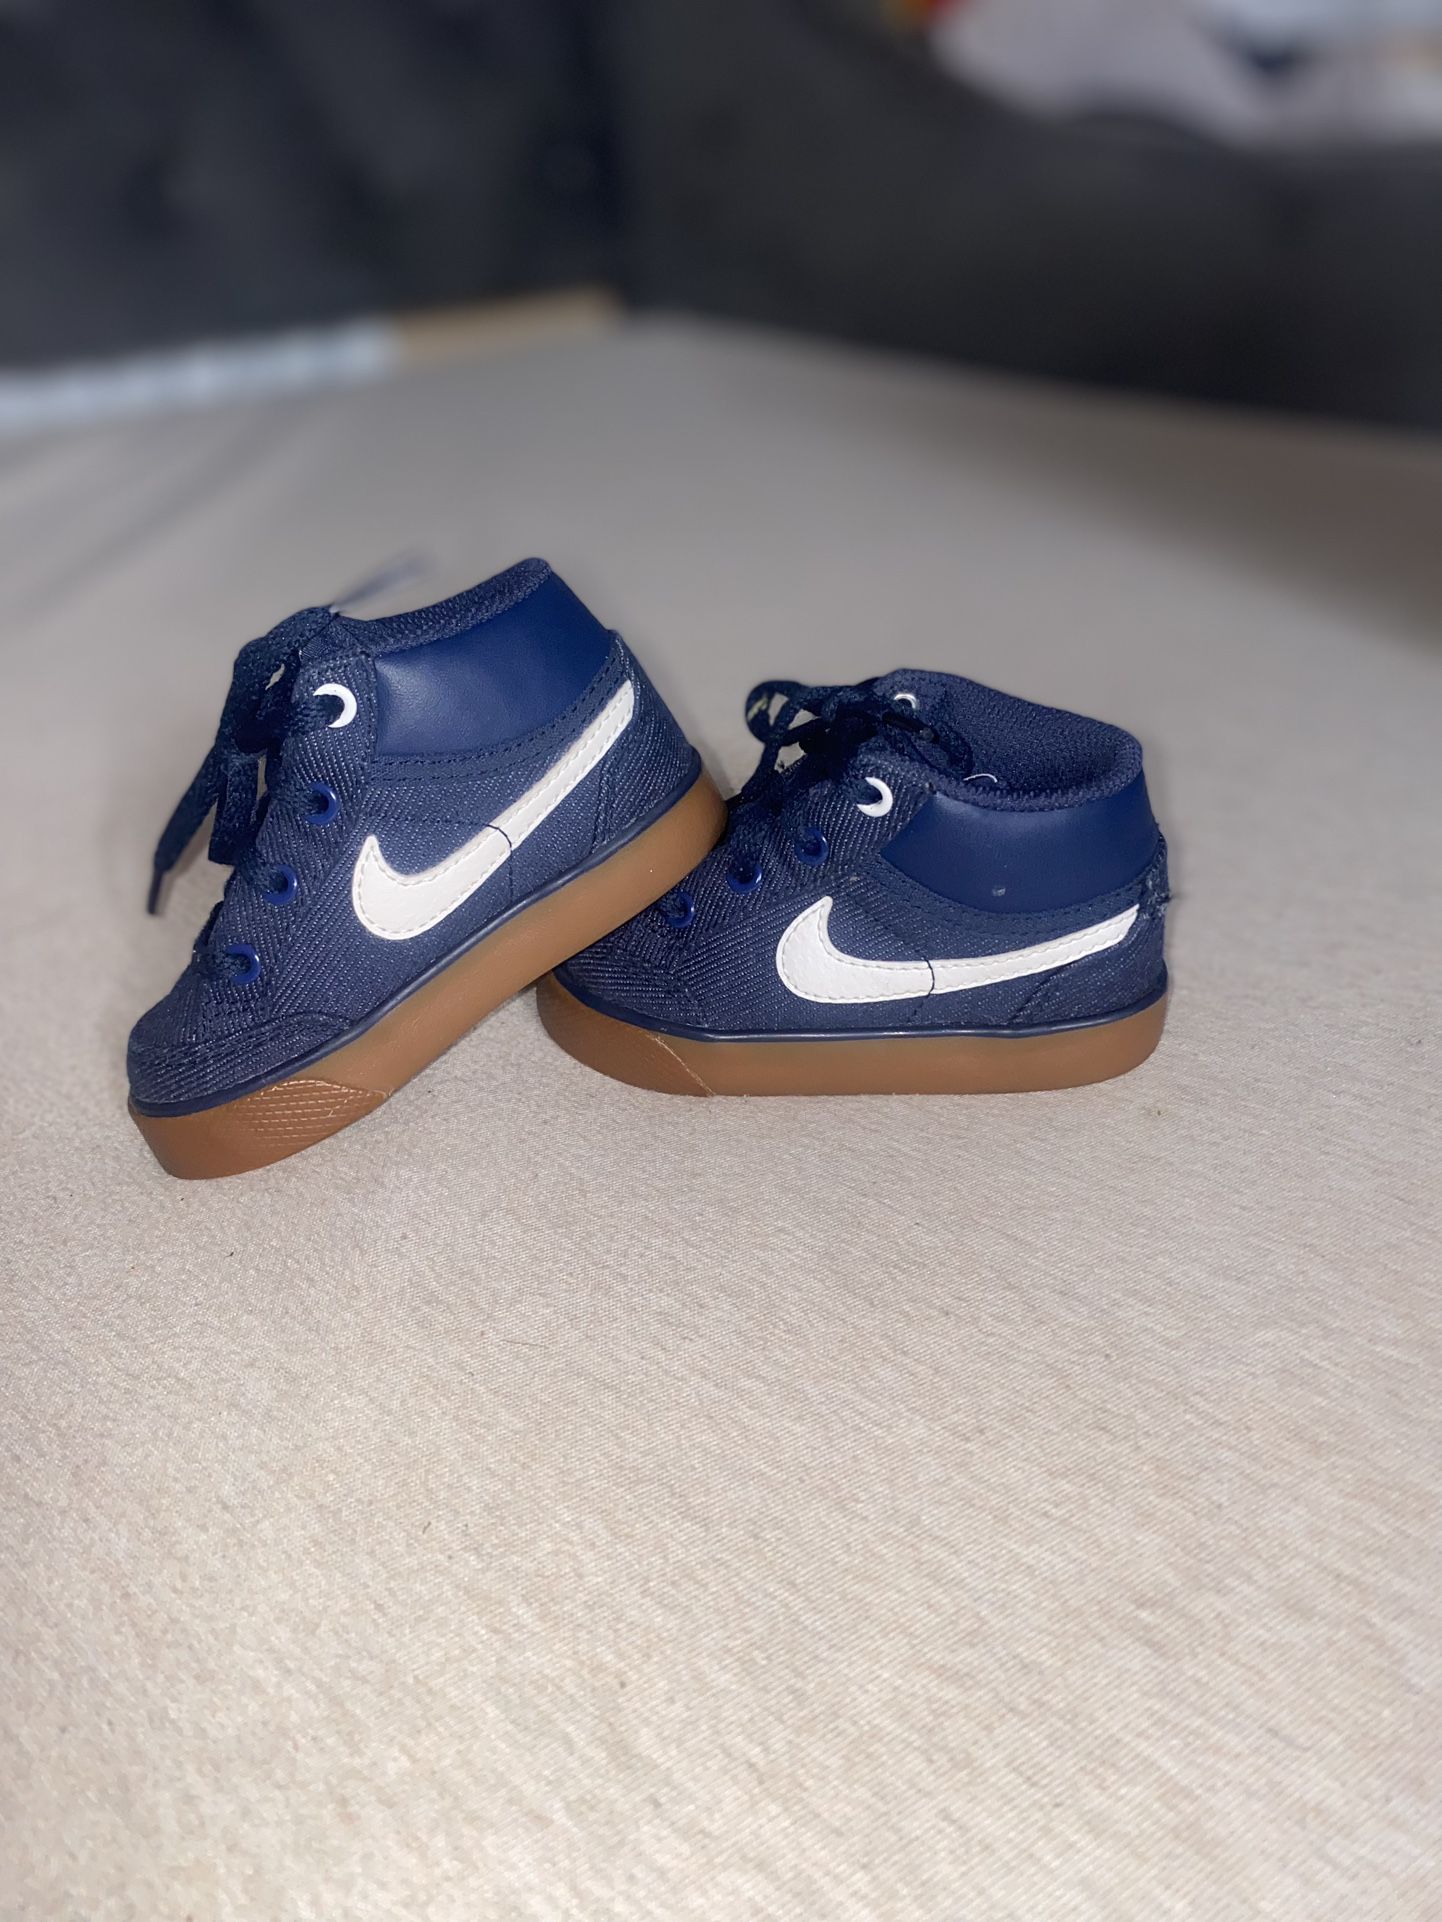 Baby Nike 